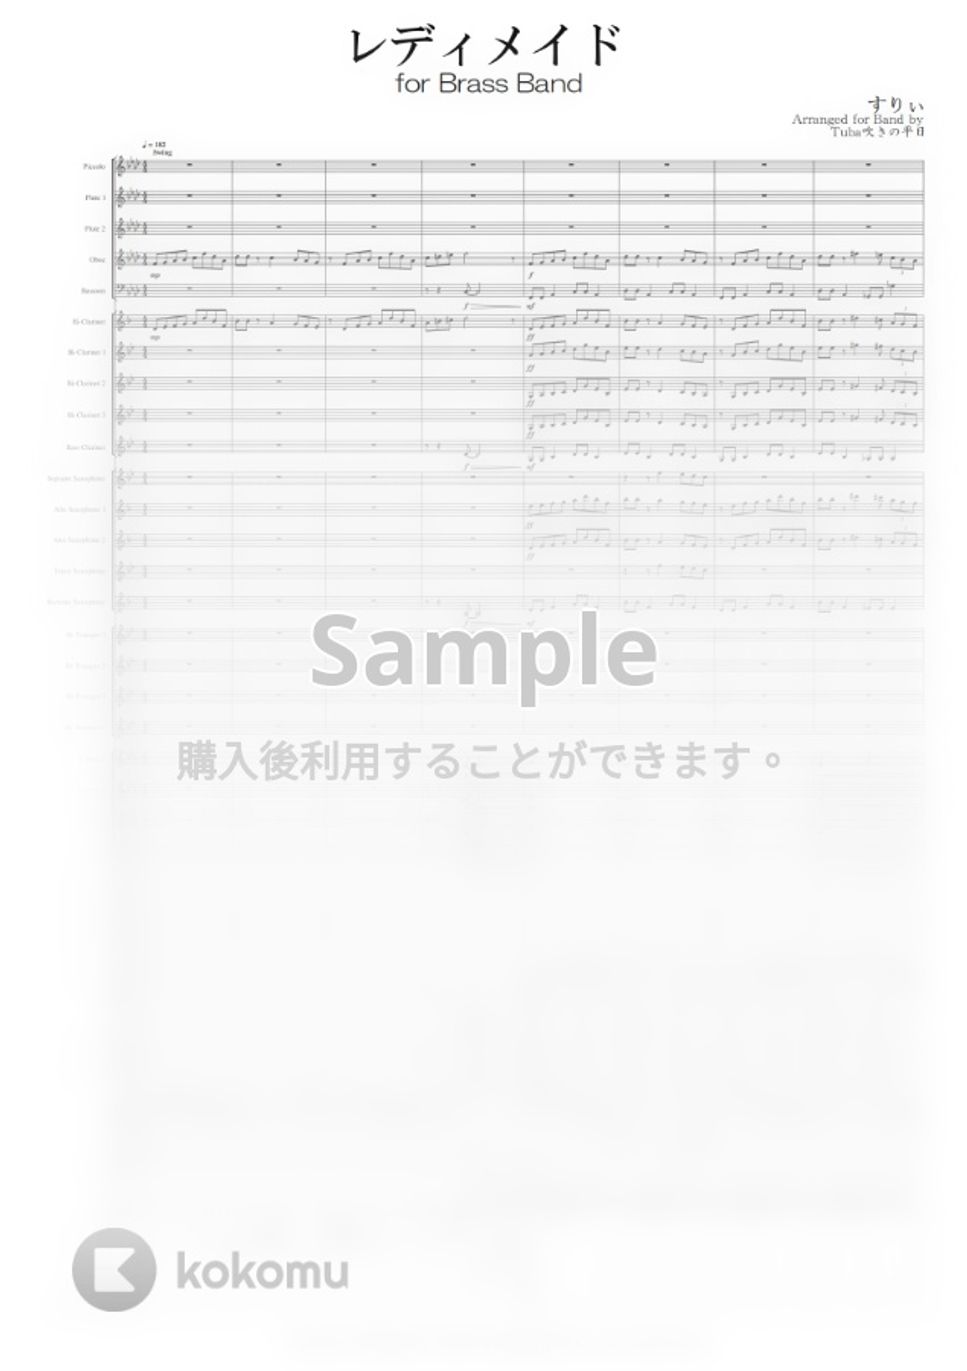 Ado - レディメイド (吹奏楽) by Tuba吹きの平日